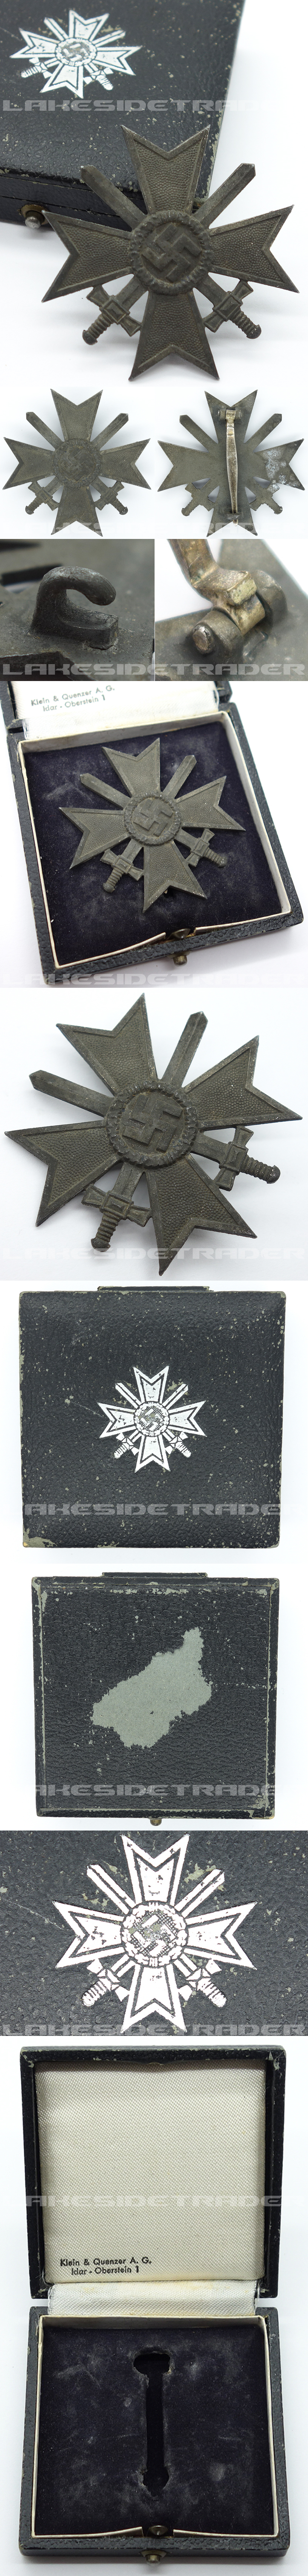 Cased 1st Class War Merit Cross with Swords by K&Q